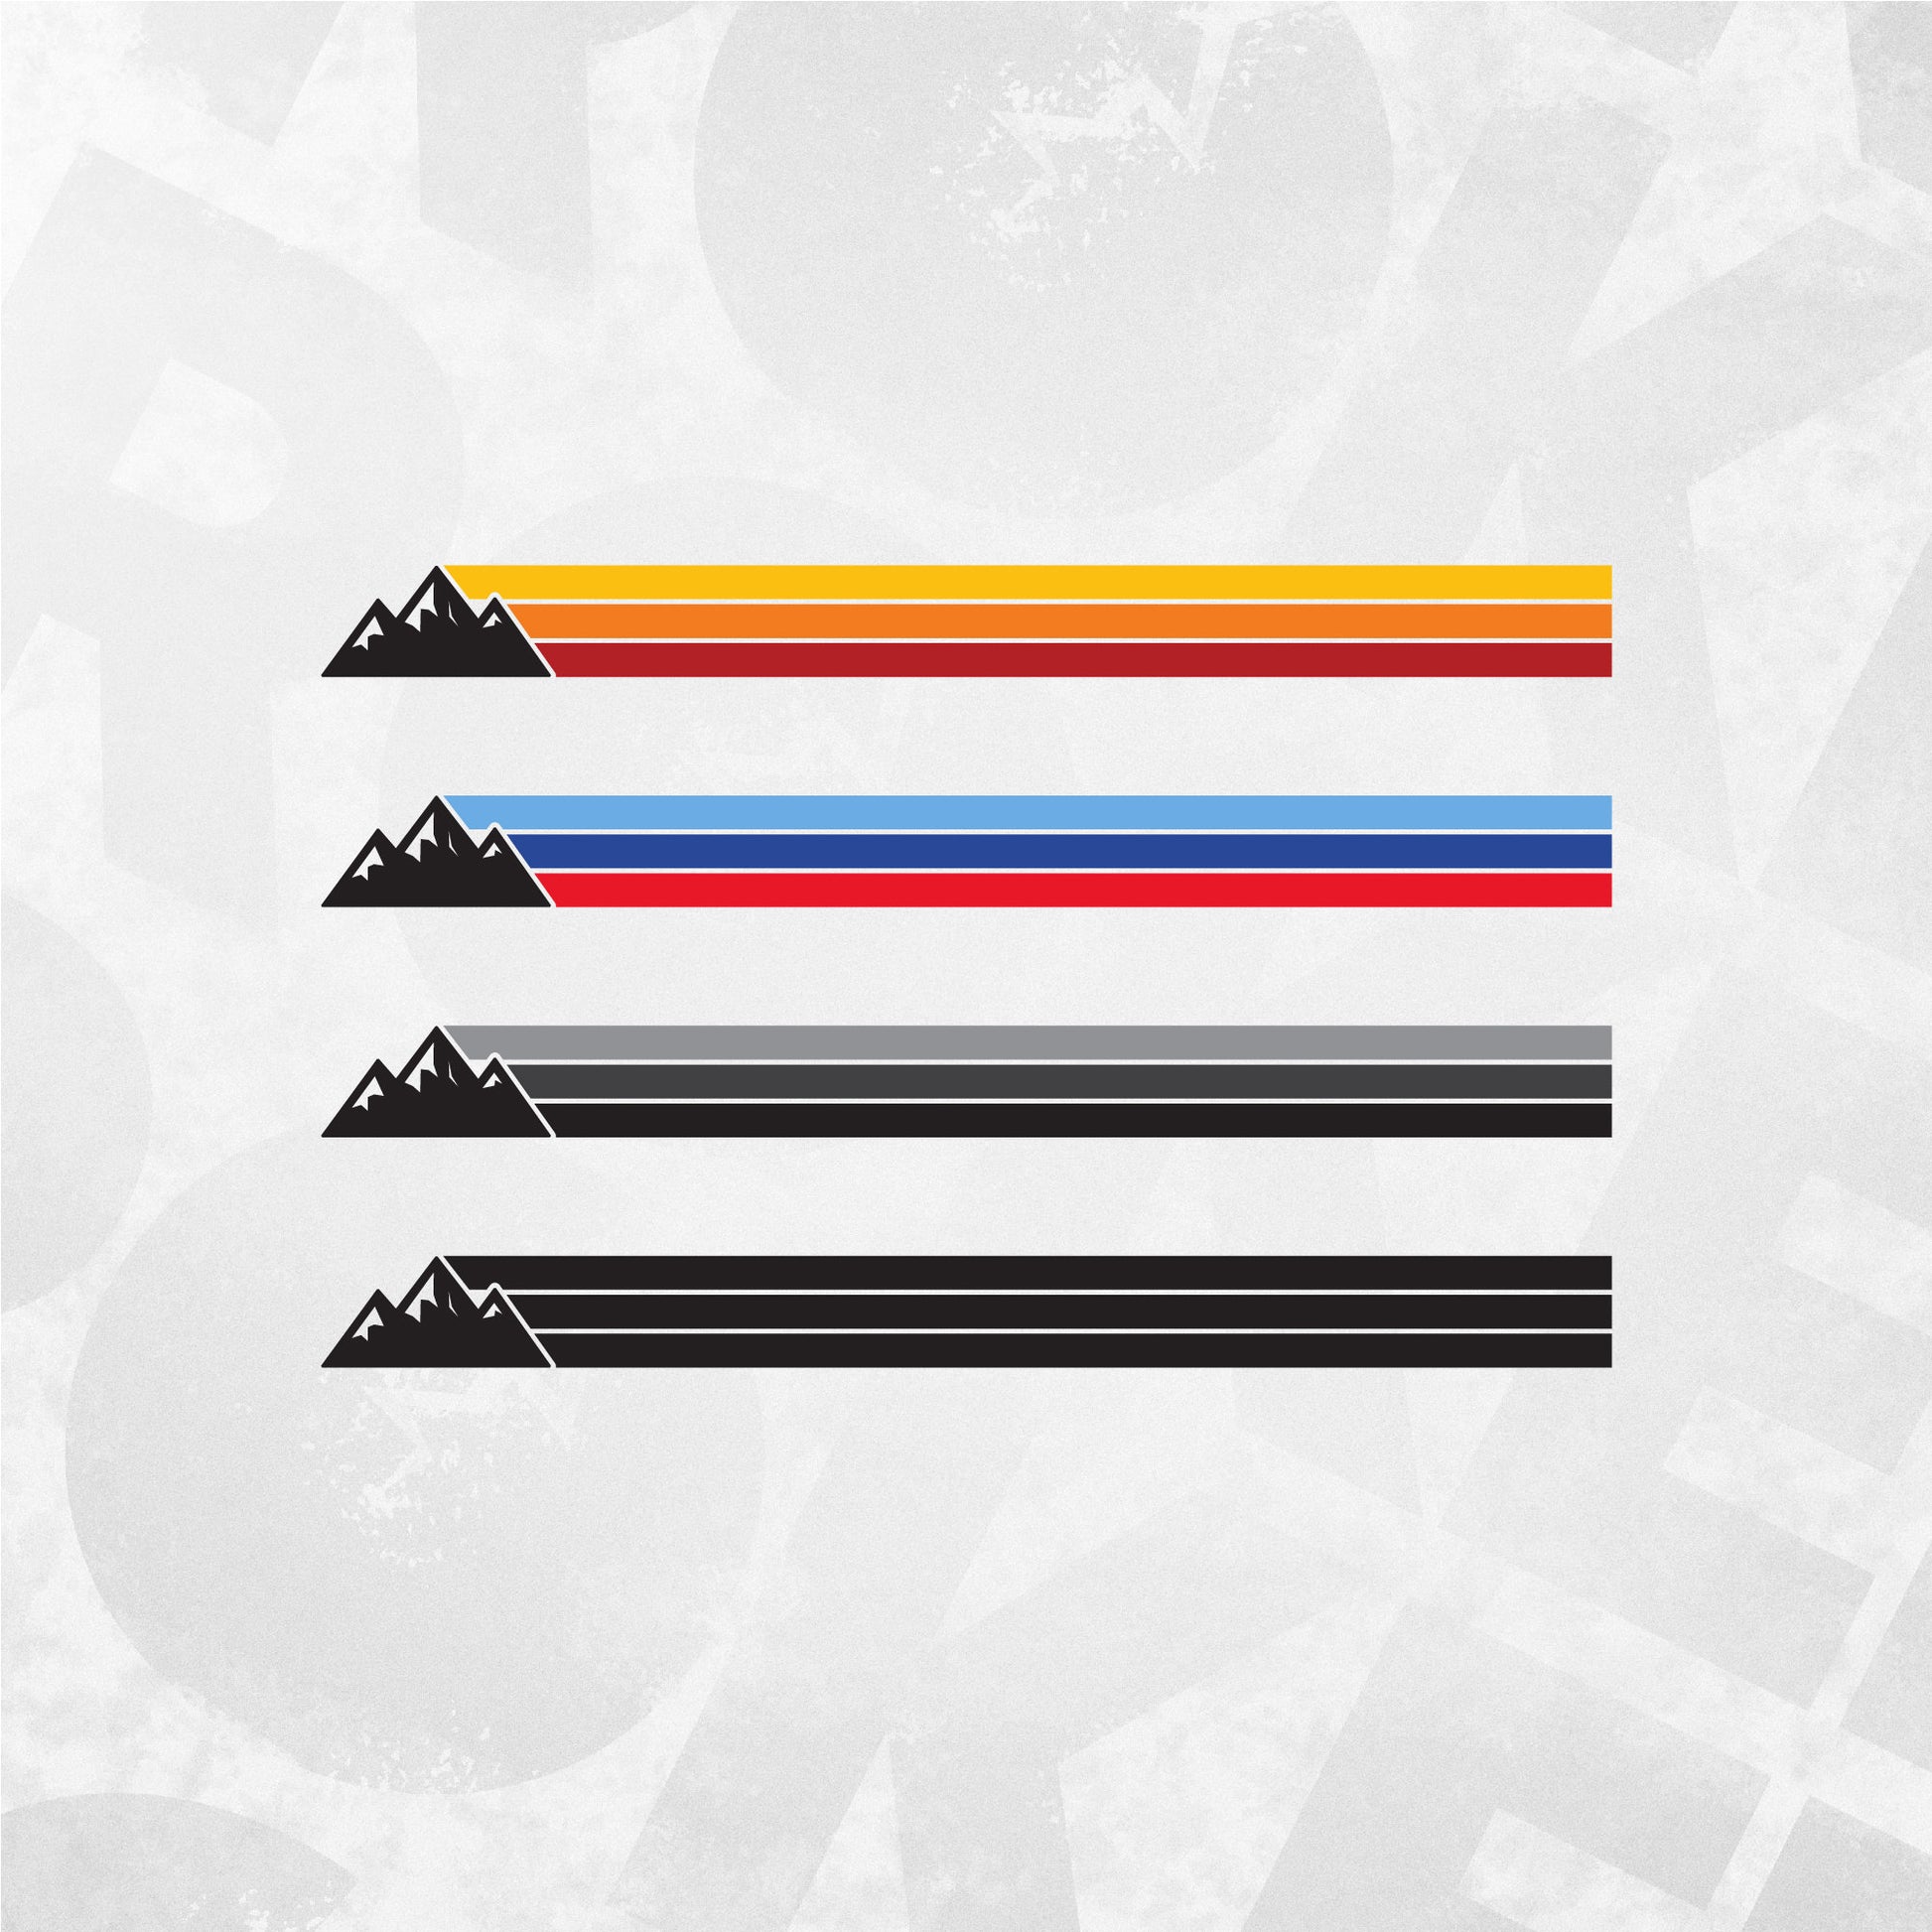 Toyota Tacoma Decal, Mountain racing side stripe, Ivan Stewart TRD inspired racing rocker panel graphics